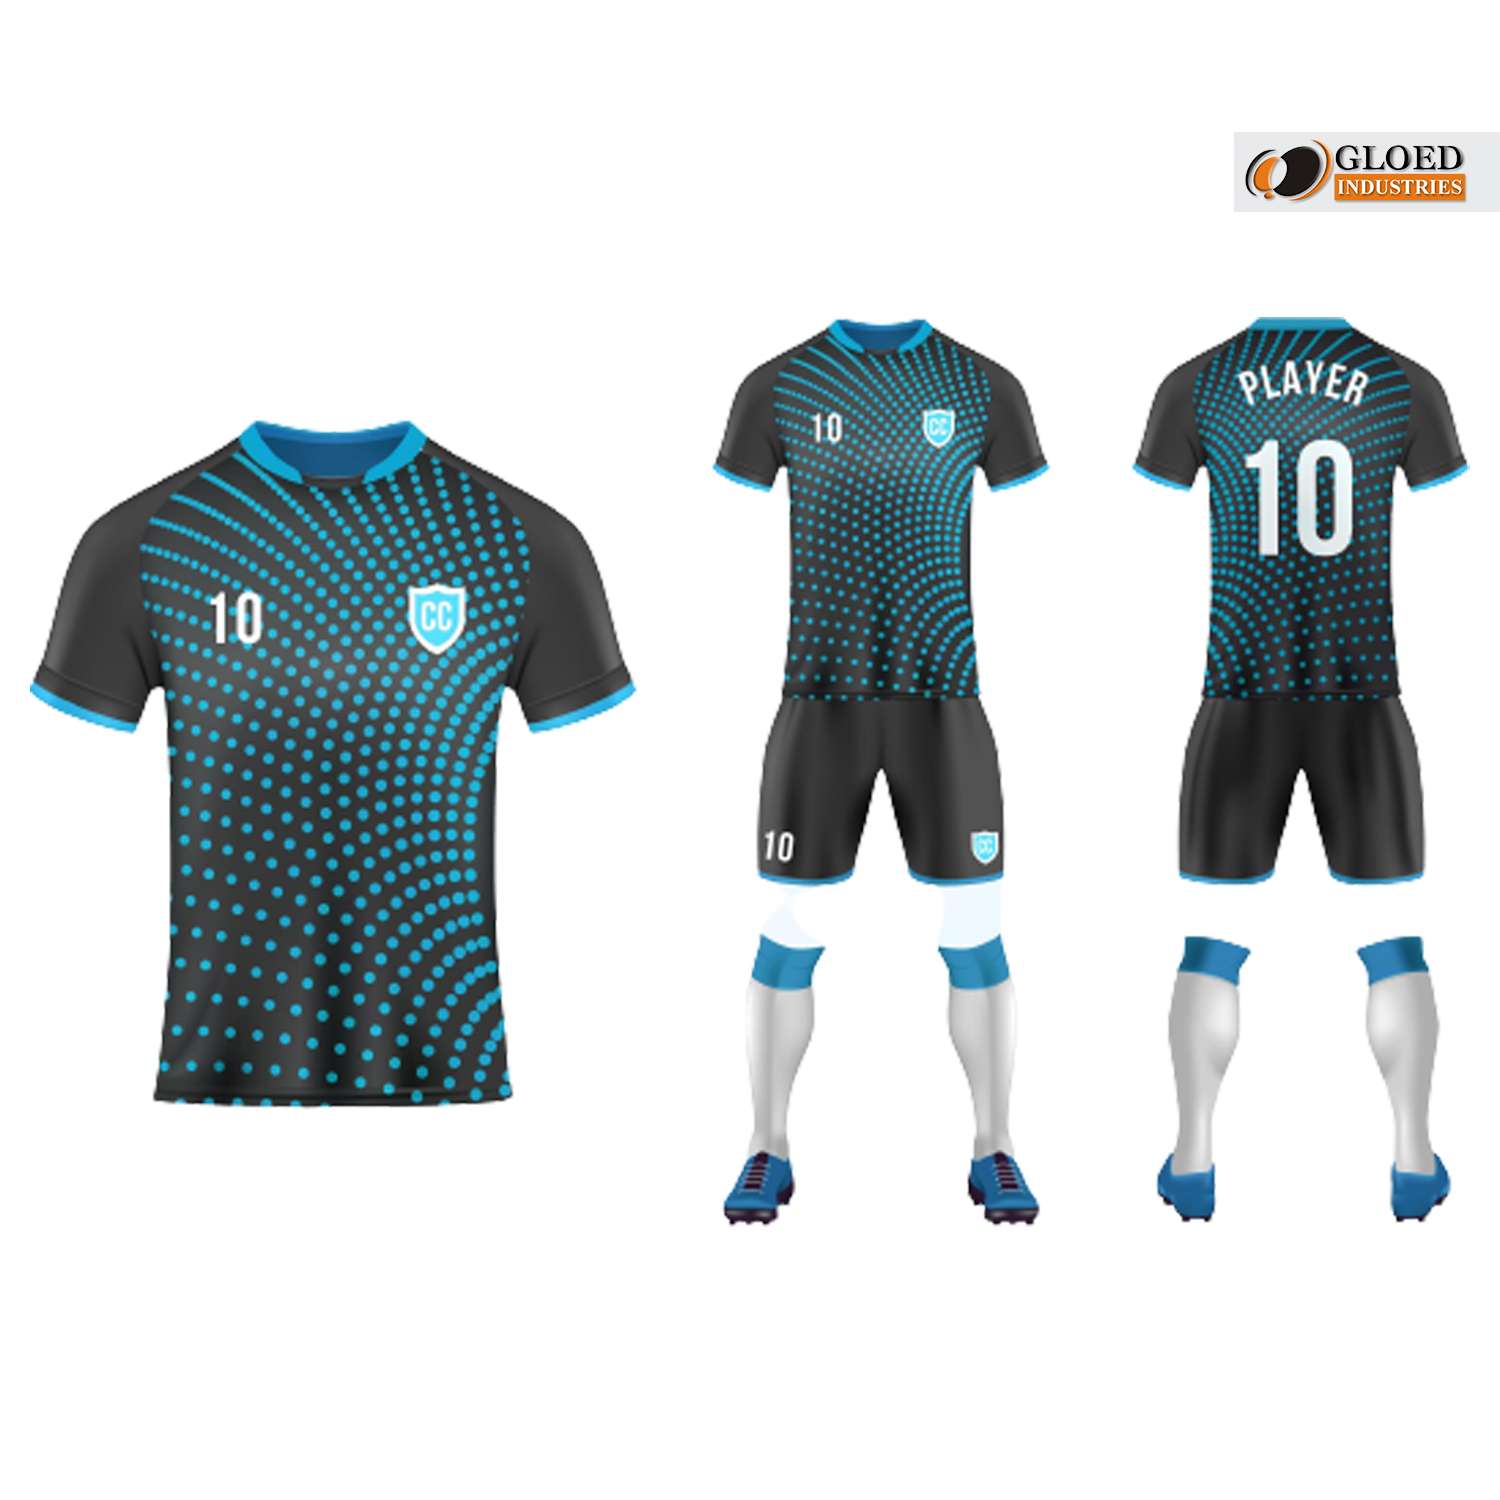 Custom Soccer Uniform Sets - Complete Team Kits